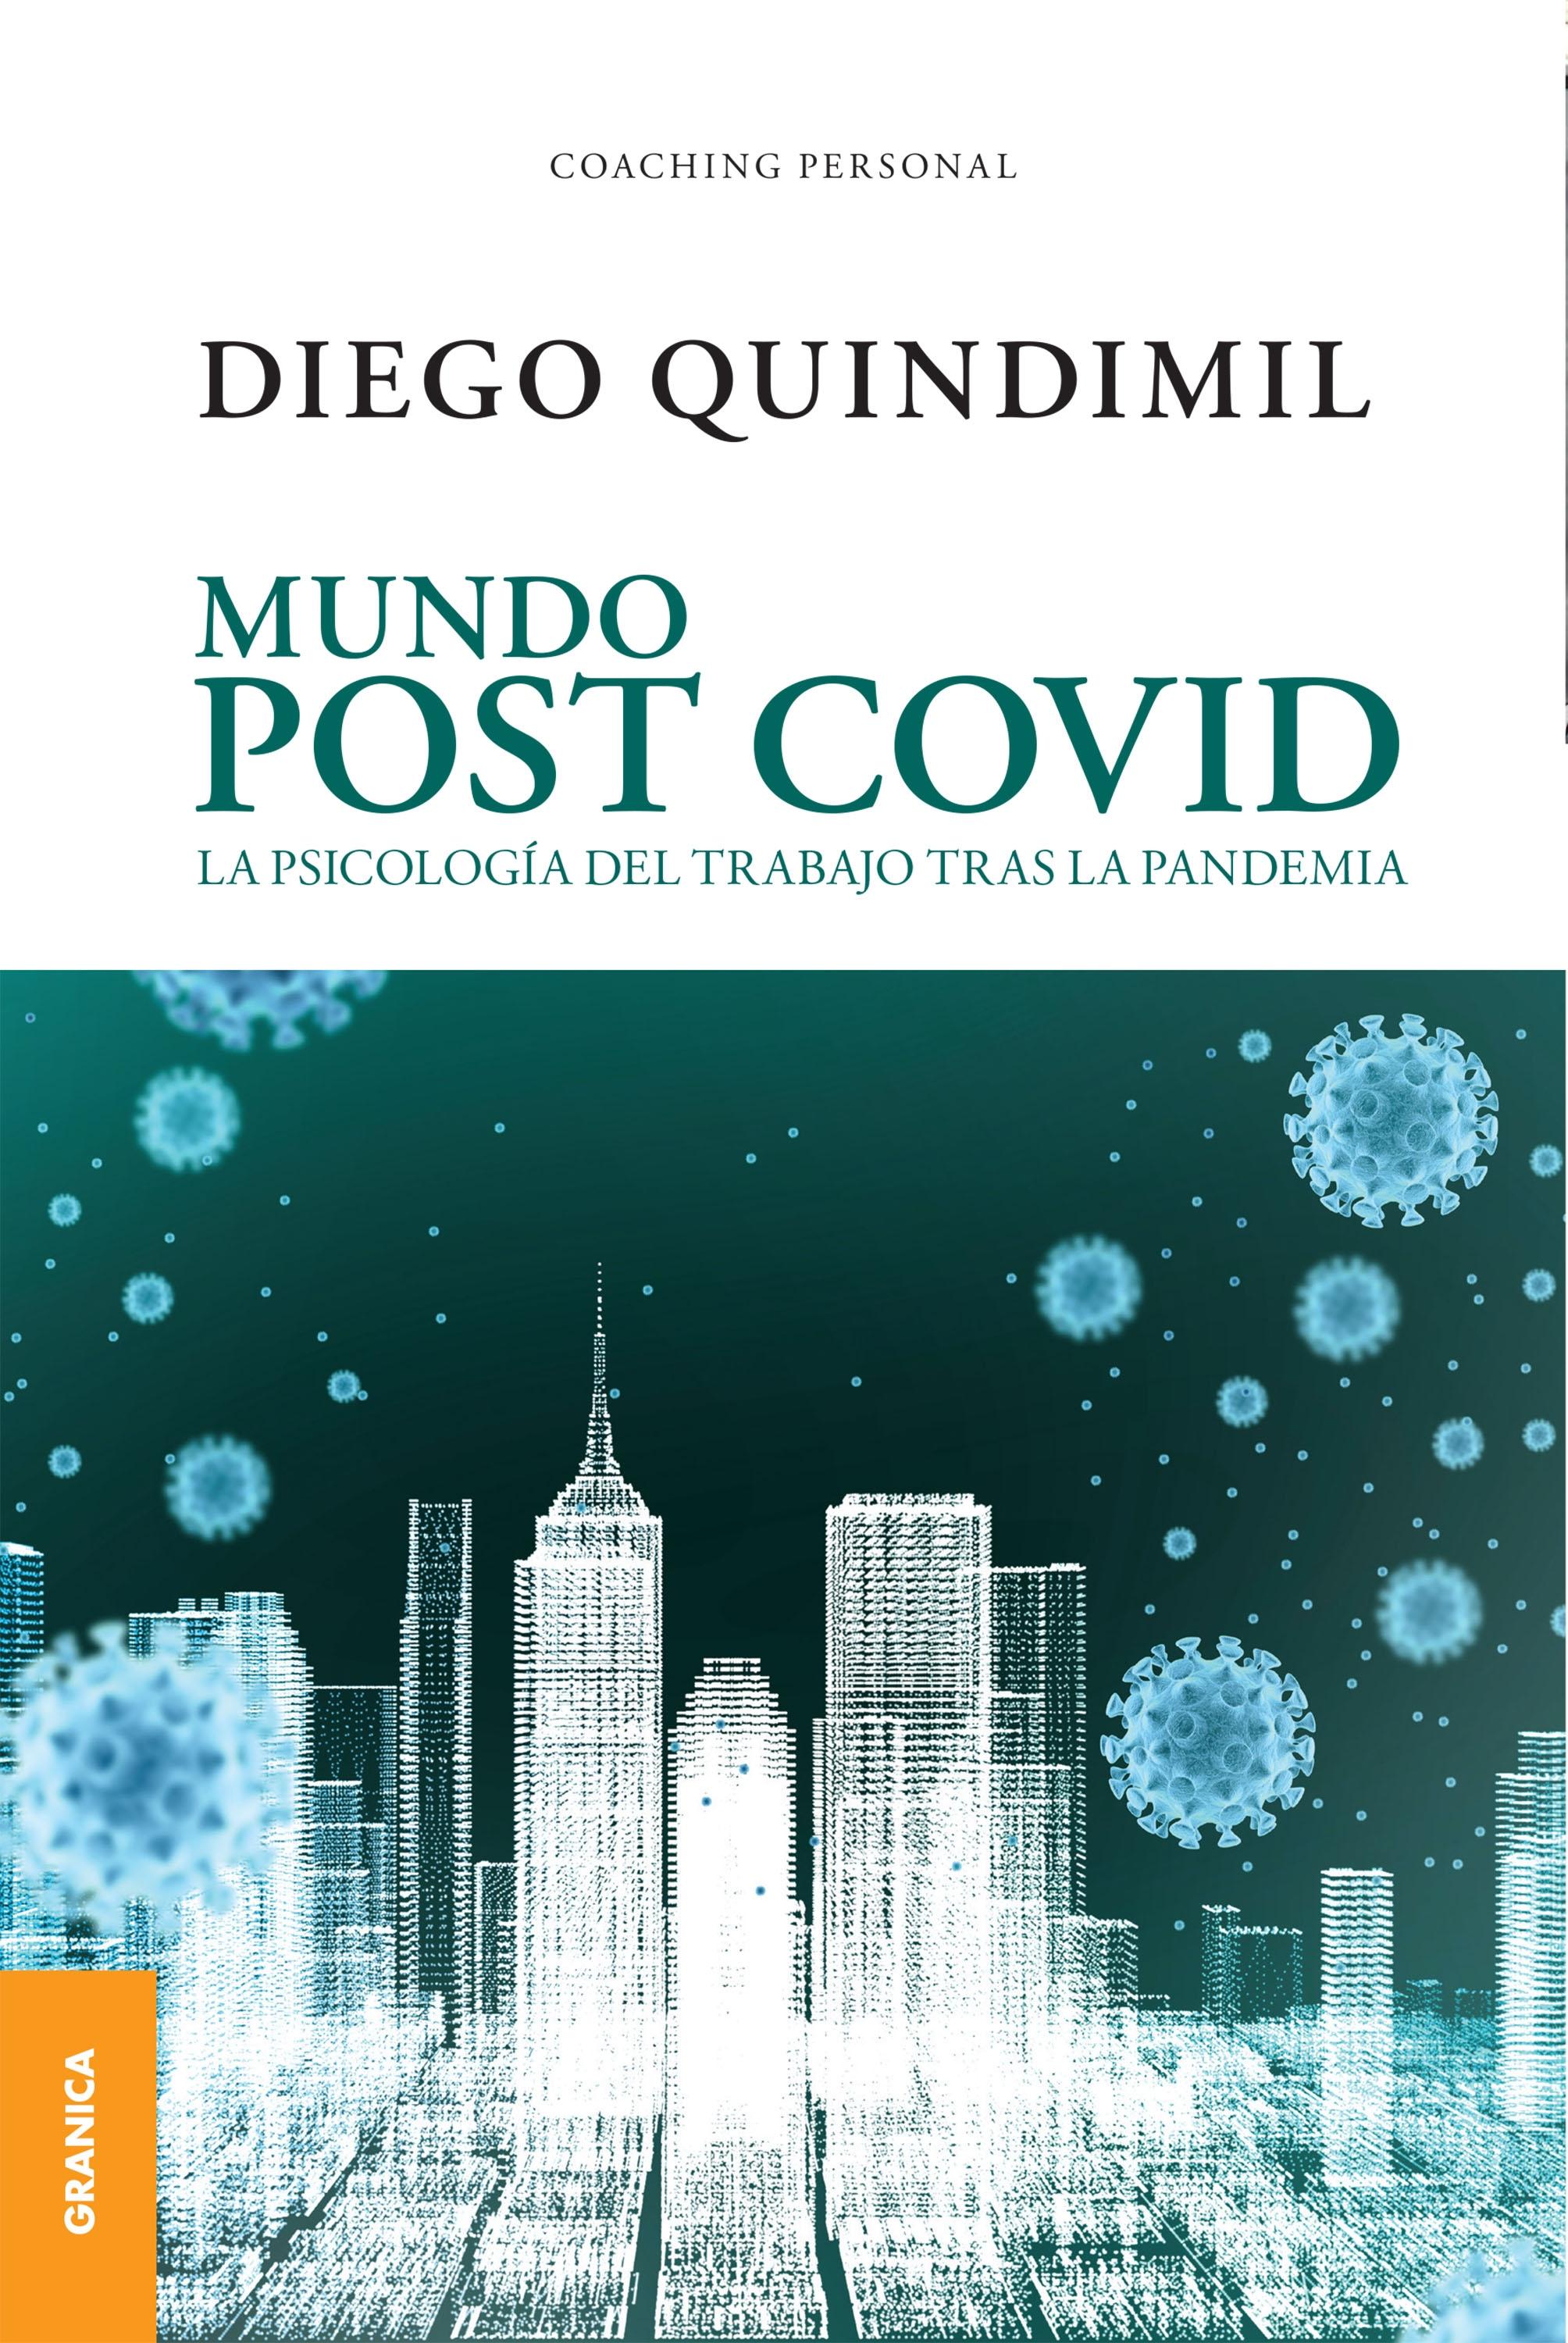 Mundo Post covid "La psicología del trabajo tras la pandemia"